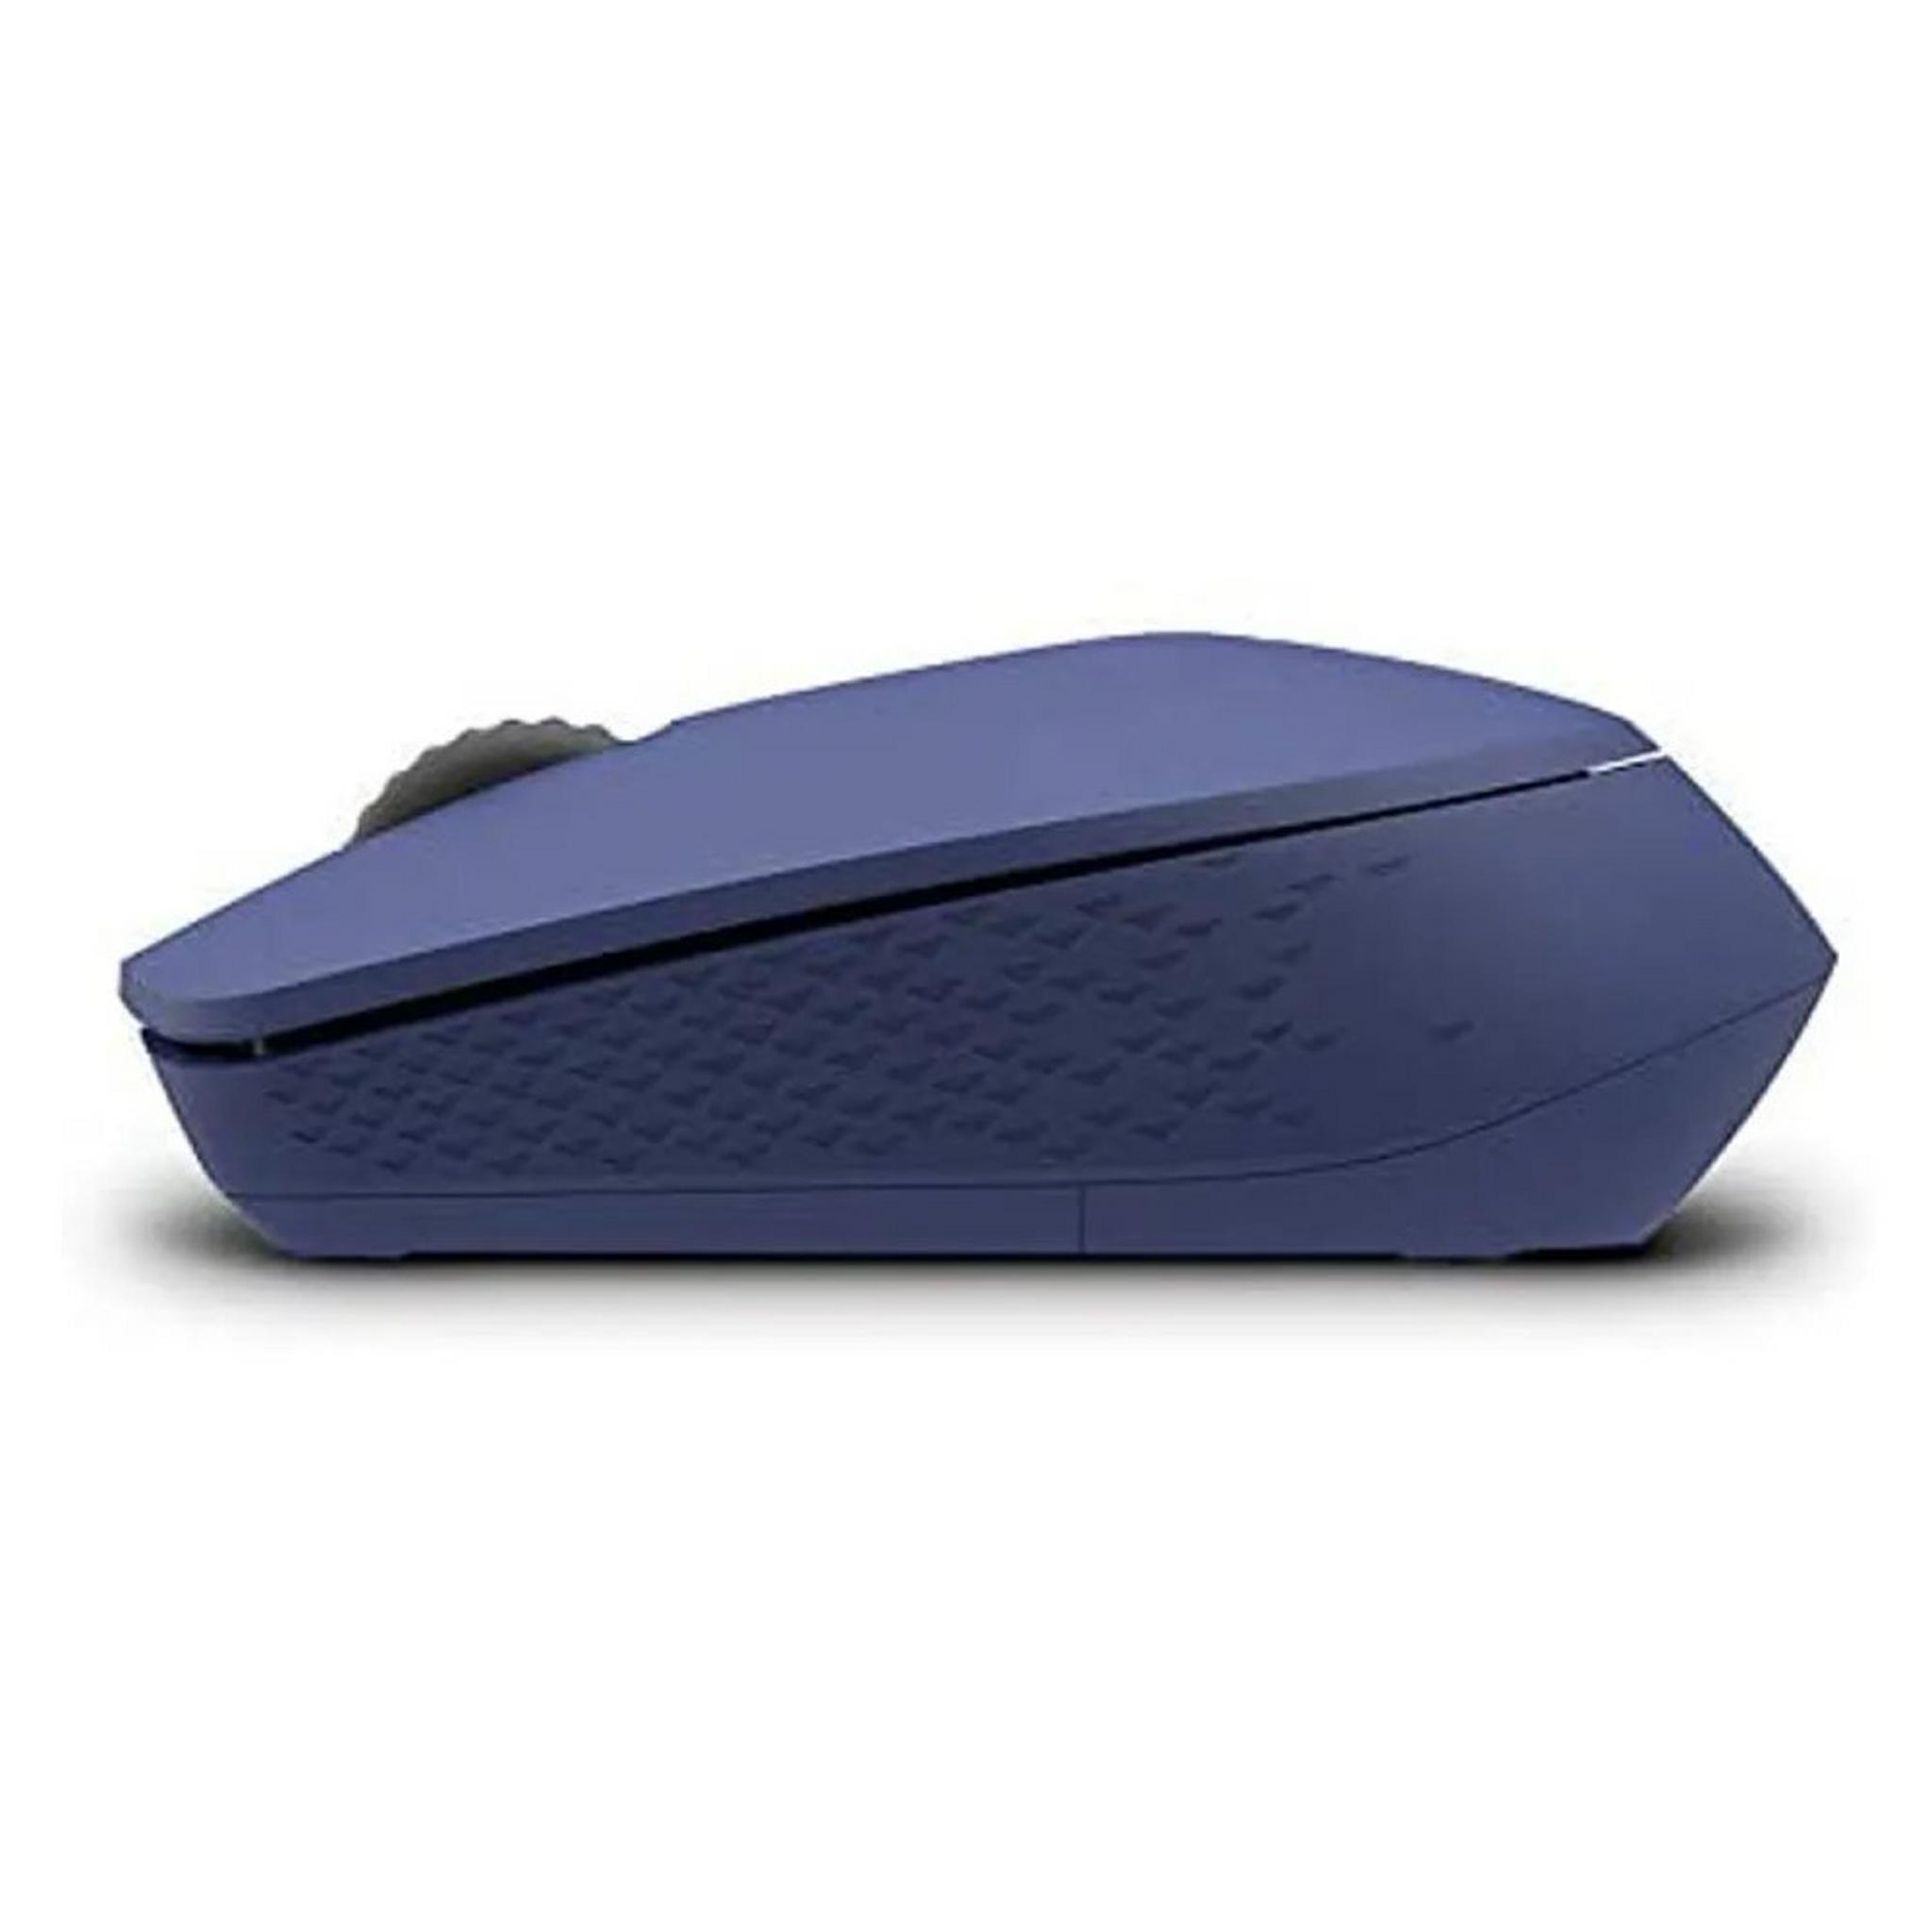 Rapoo M100 Silent Multi-Mode Wireless Mouse | Blue